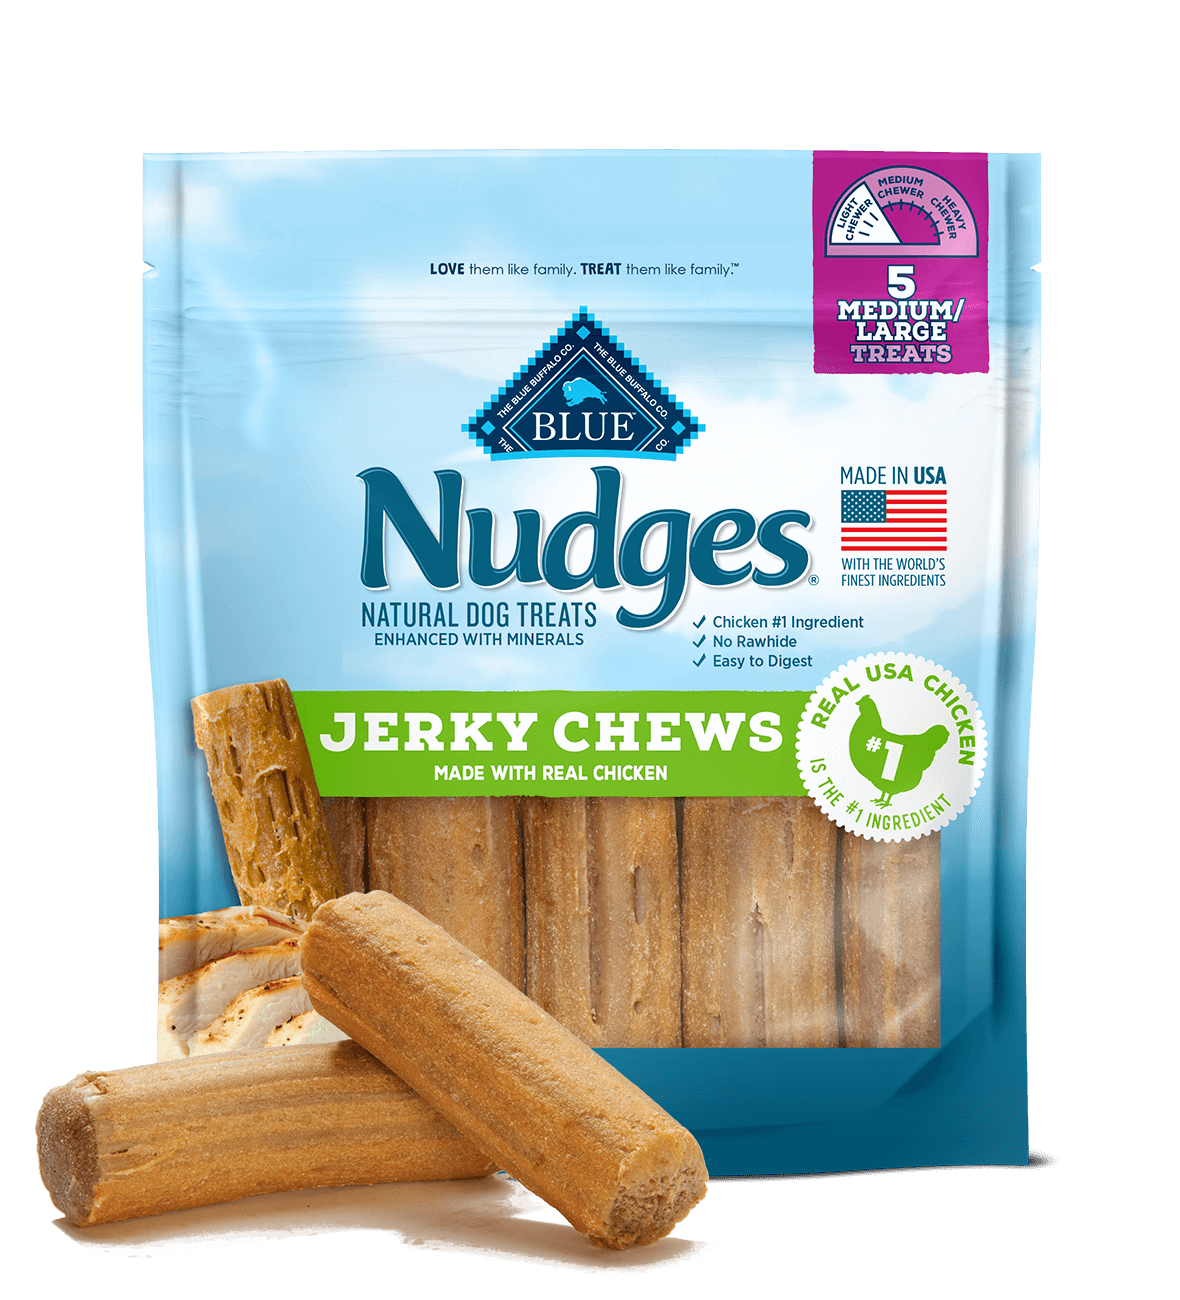 blue nudges ® medium/large rawhide-free chicken jerky chews dog treats